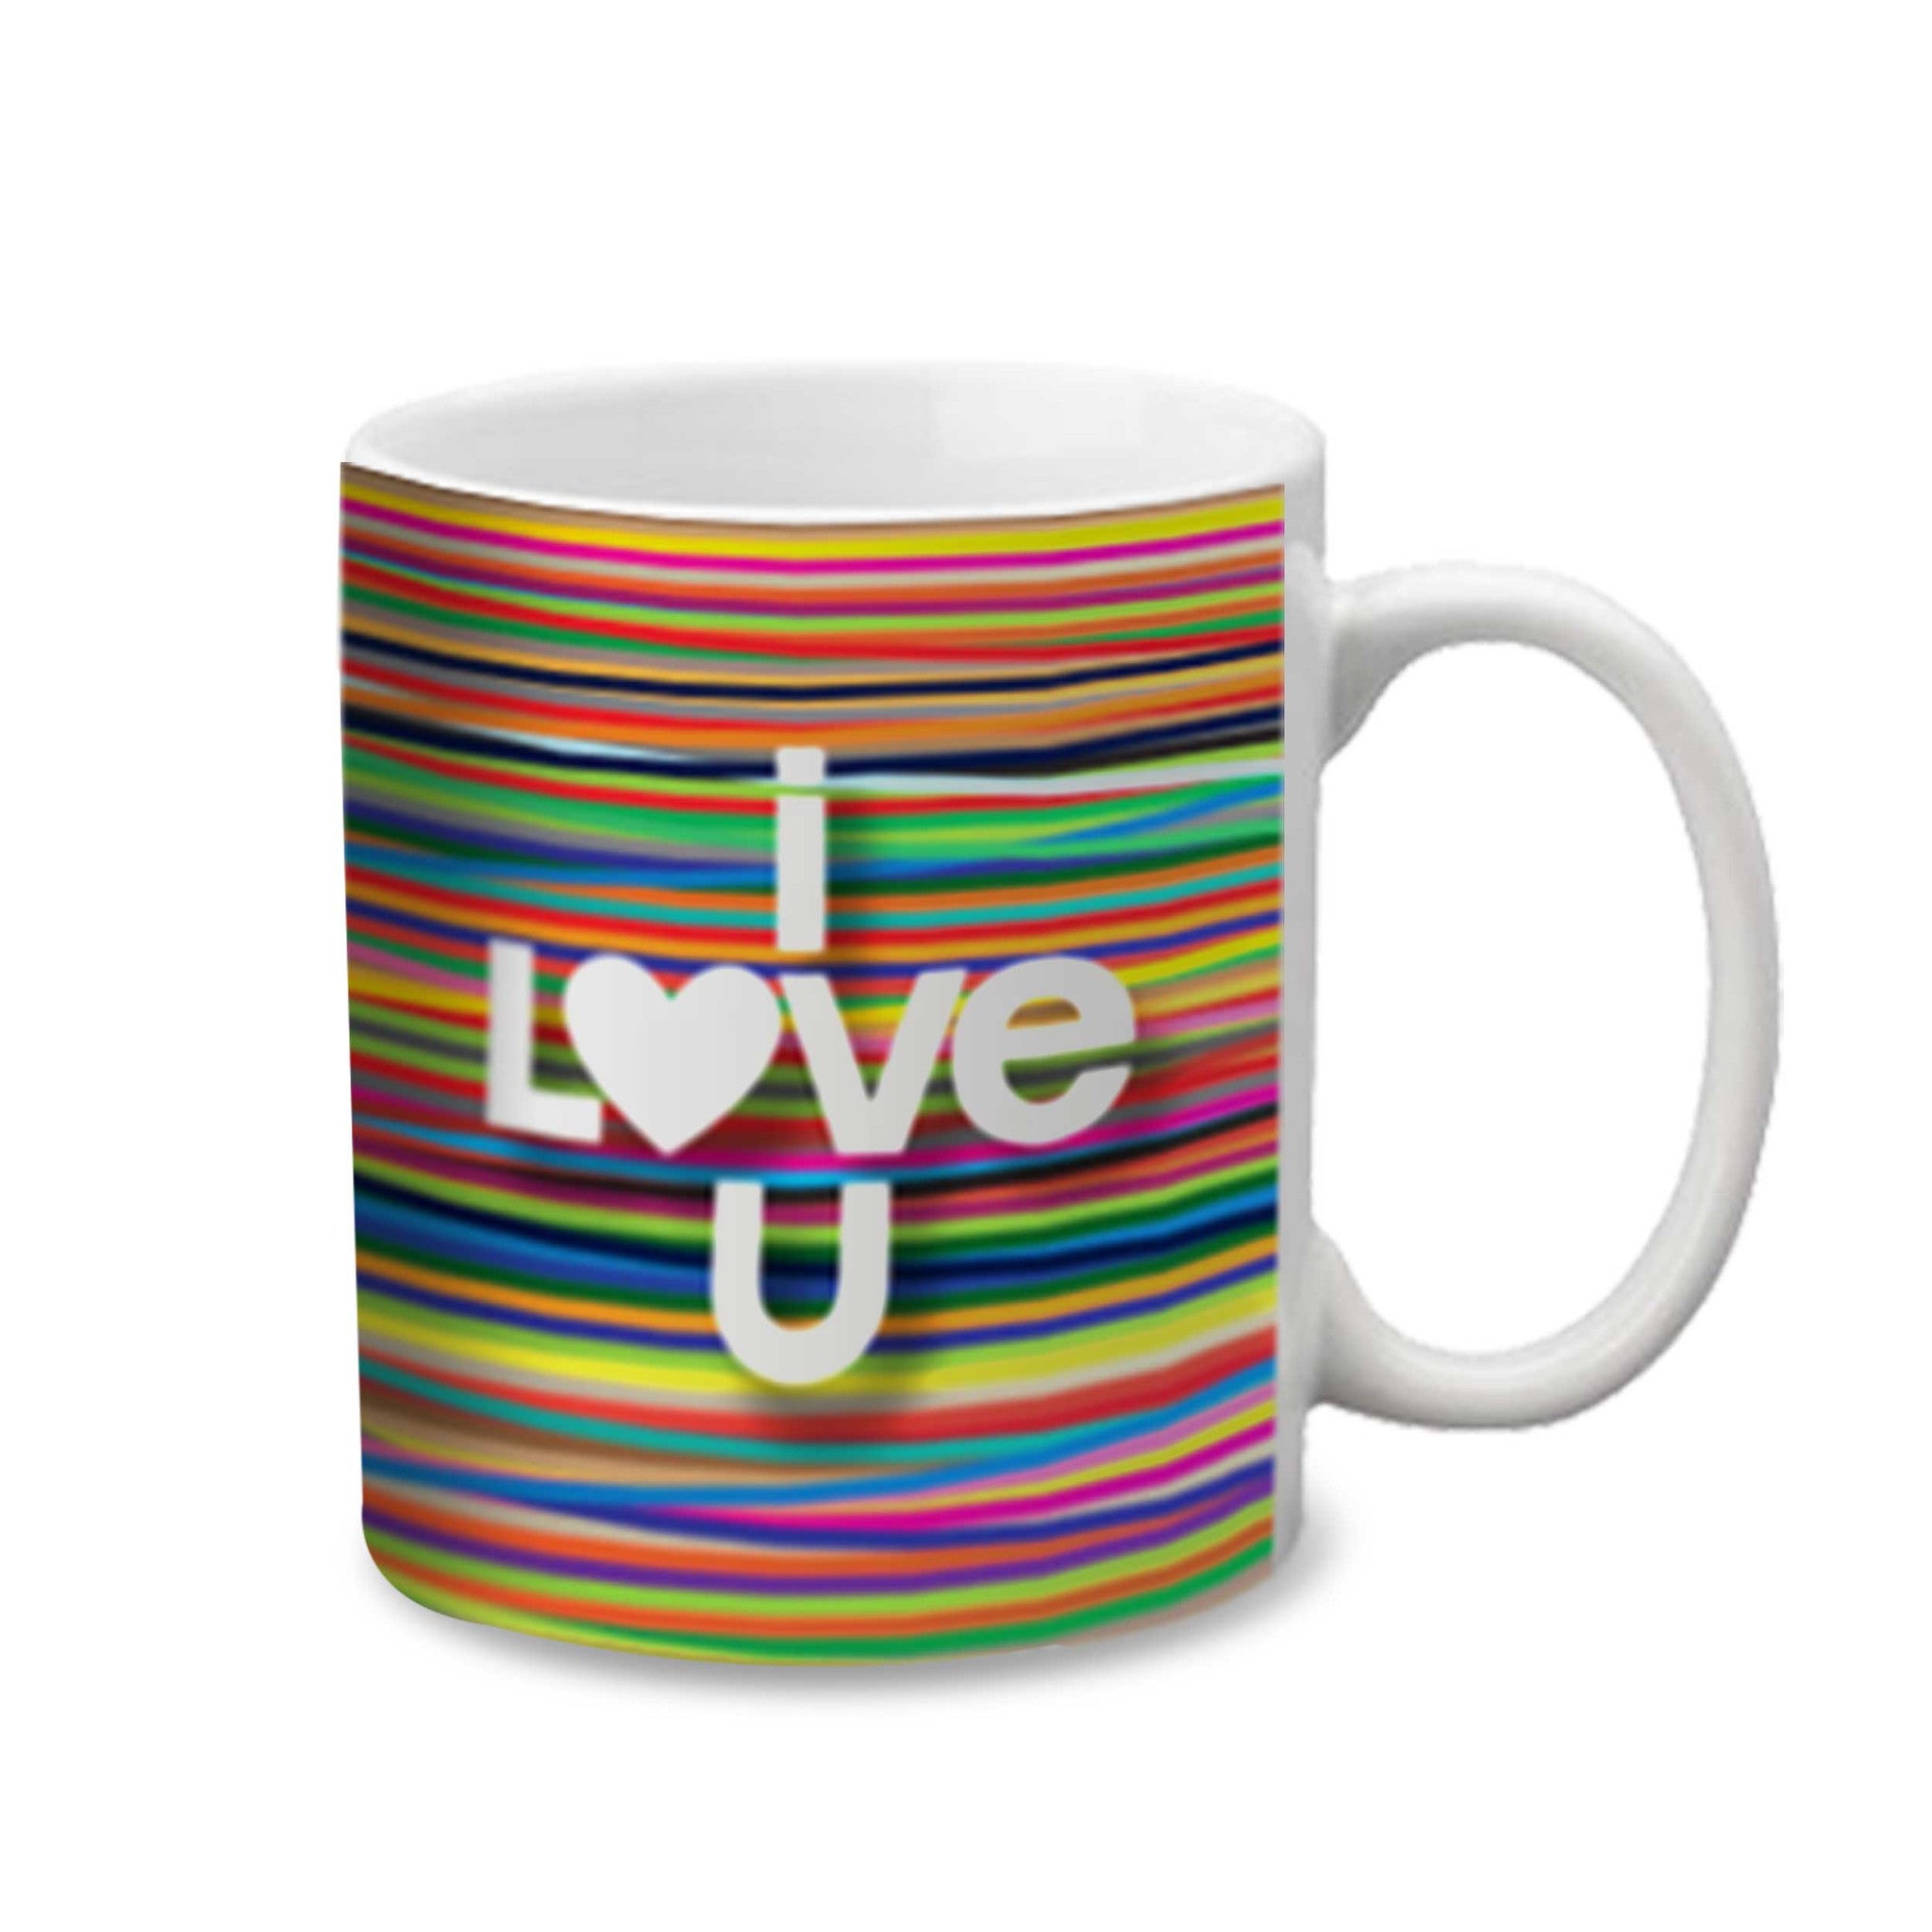 hotmuggs-colors-i-love-you-mugs-350-ml-1-pc